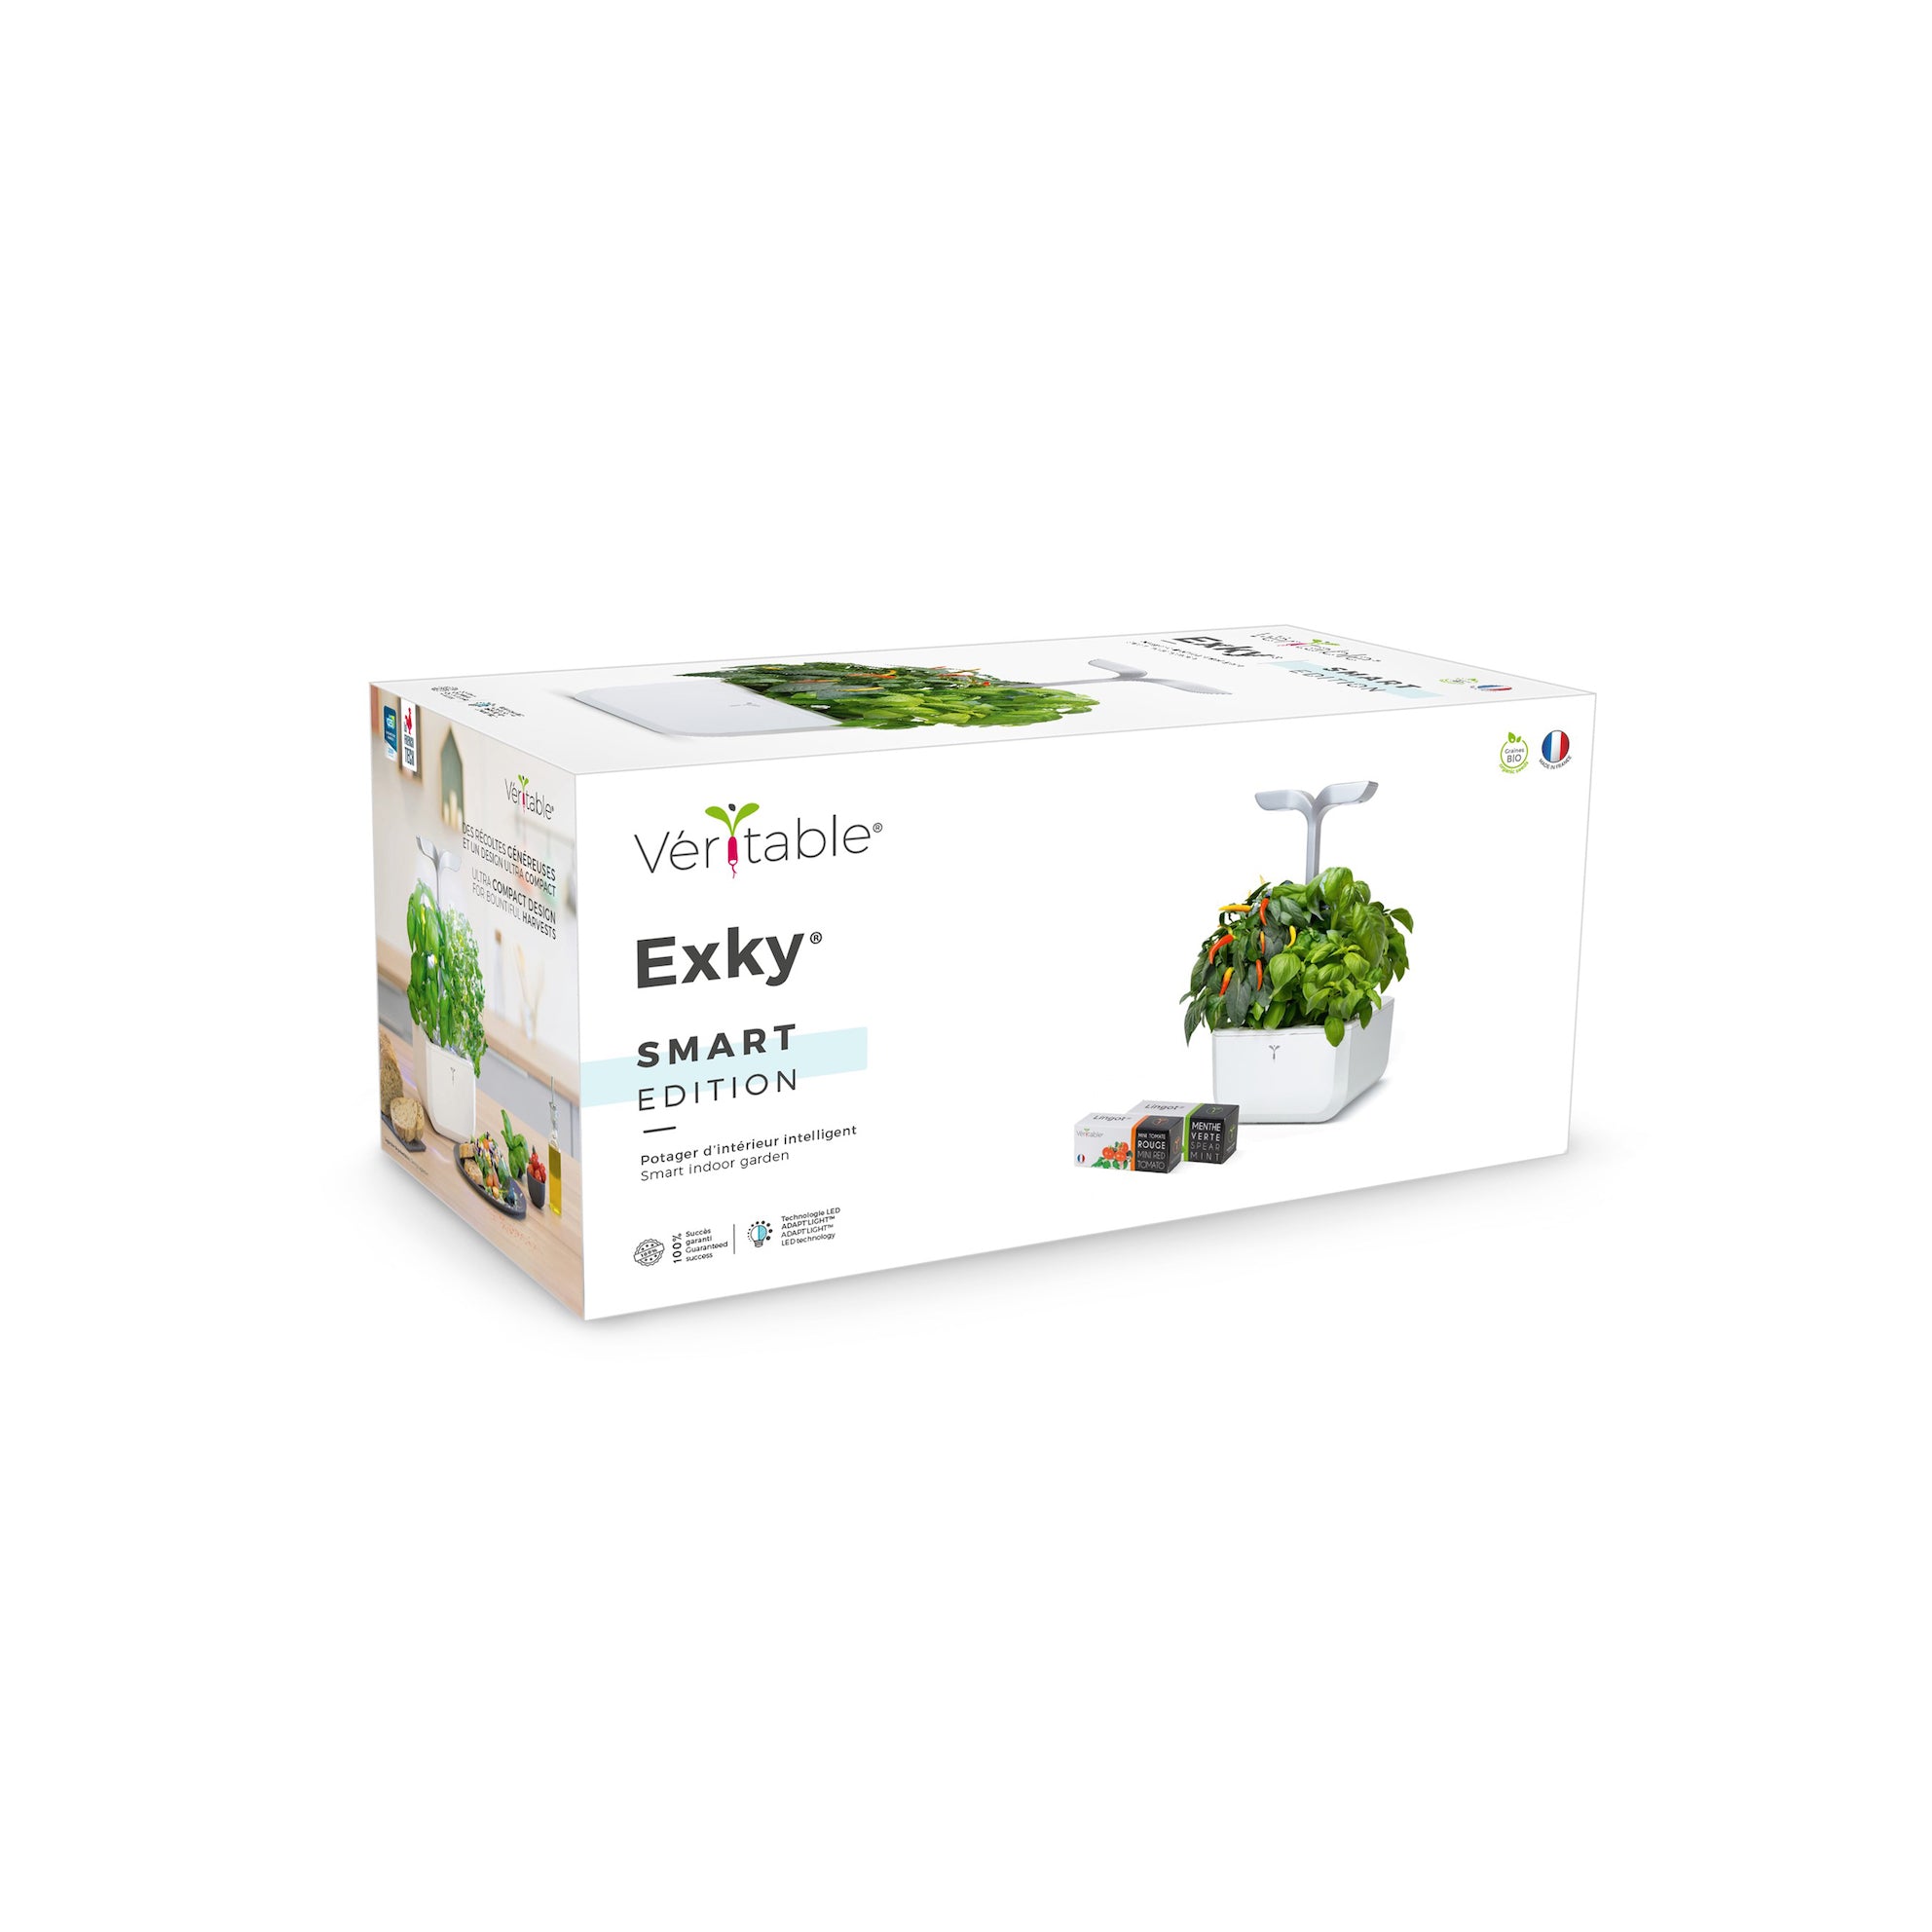 VERITABLE Smart Exky Edition White, 2 Plants